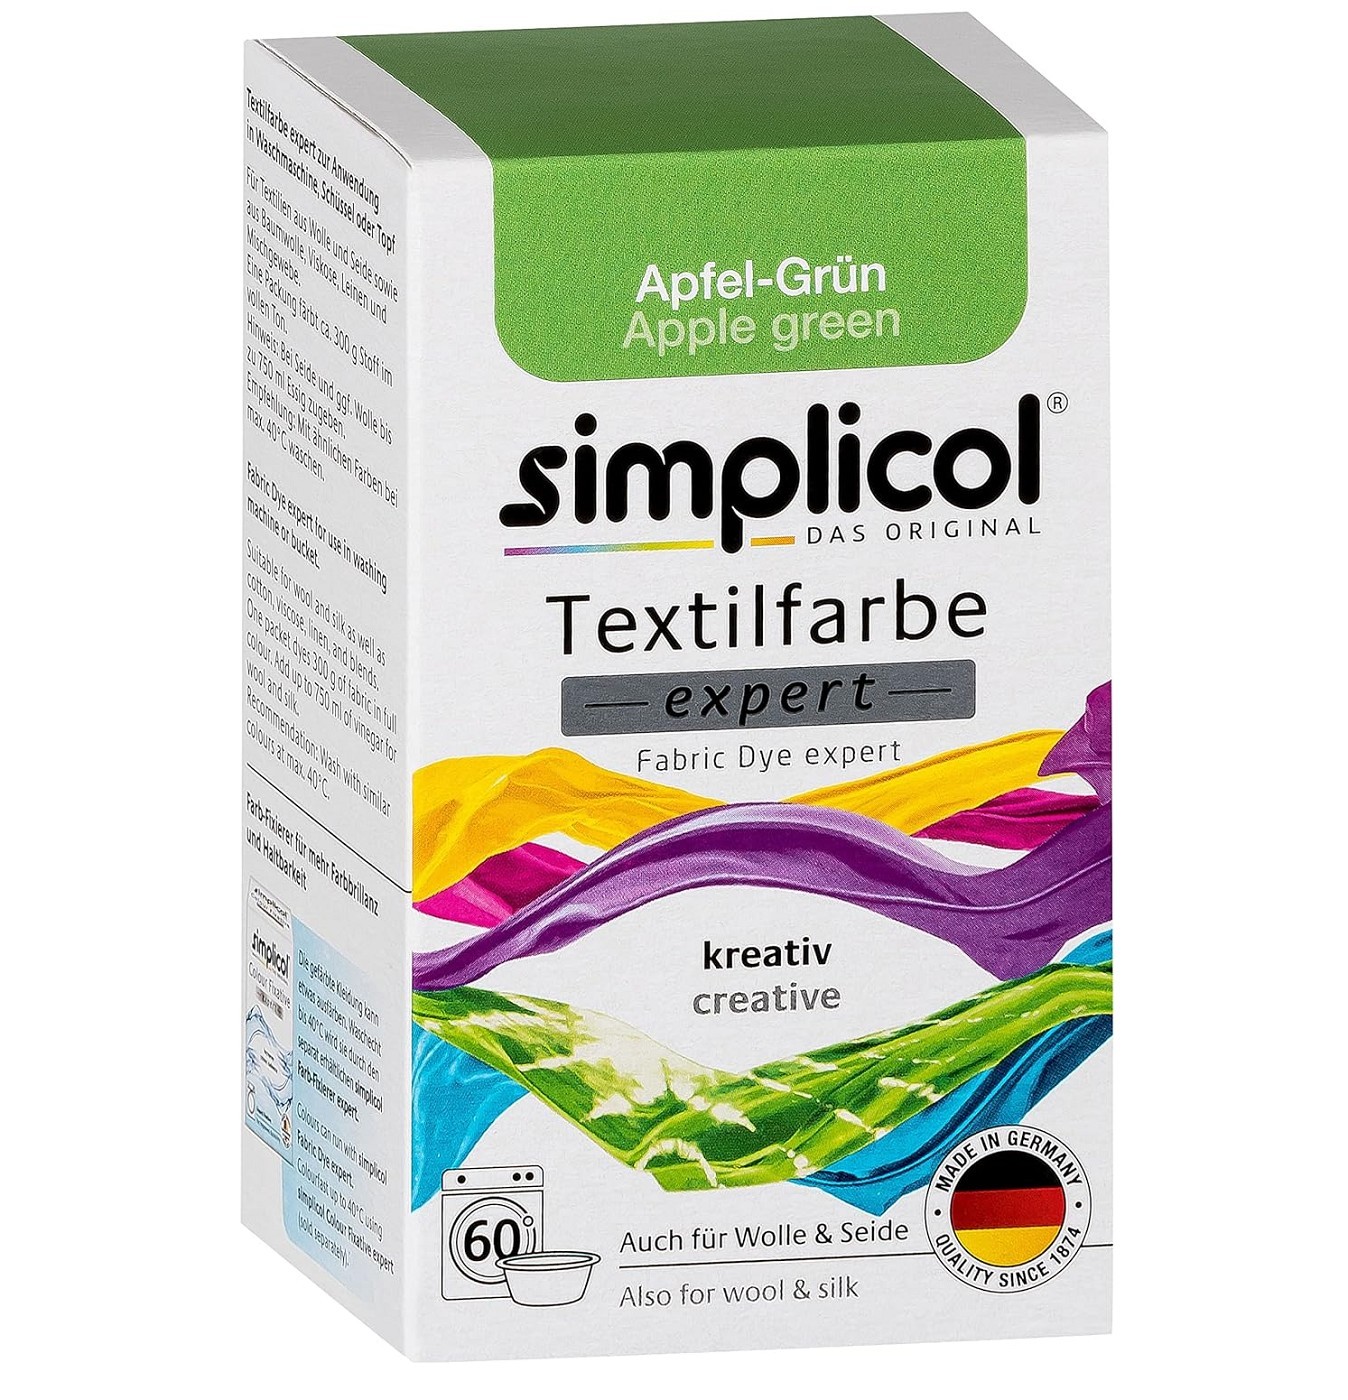 Simplicol Textilfarbe expert Apfel-Grün 300g